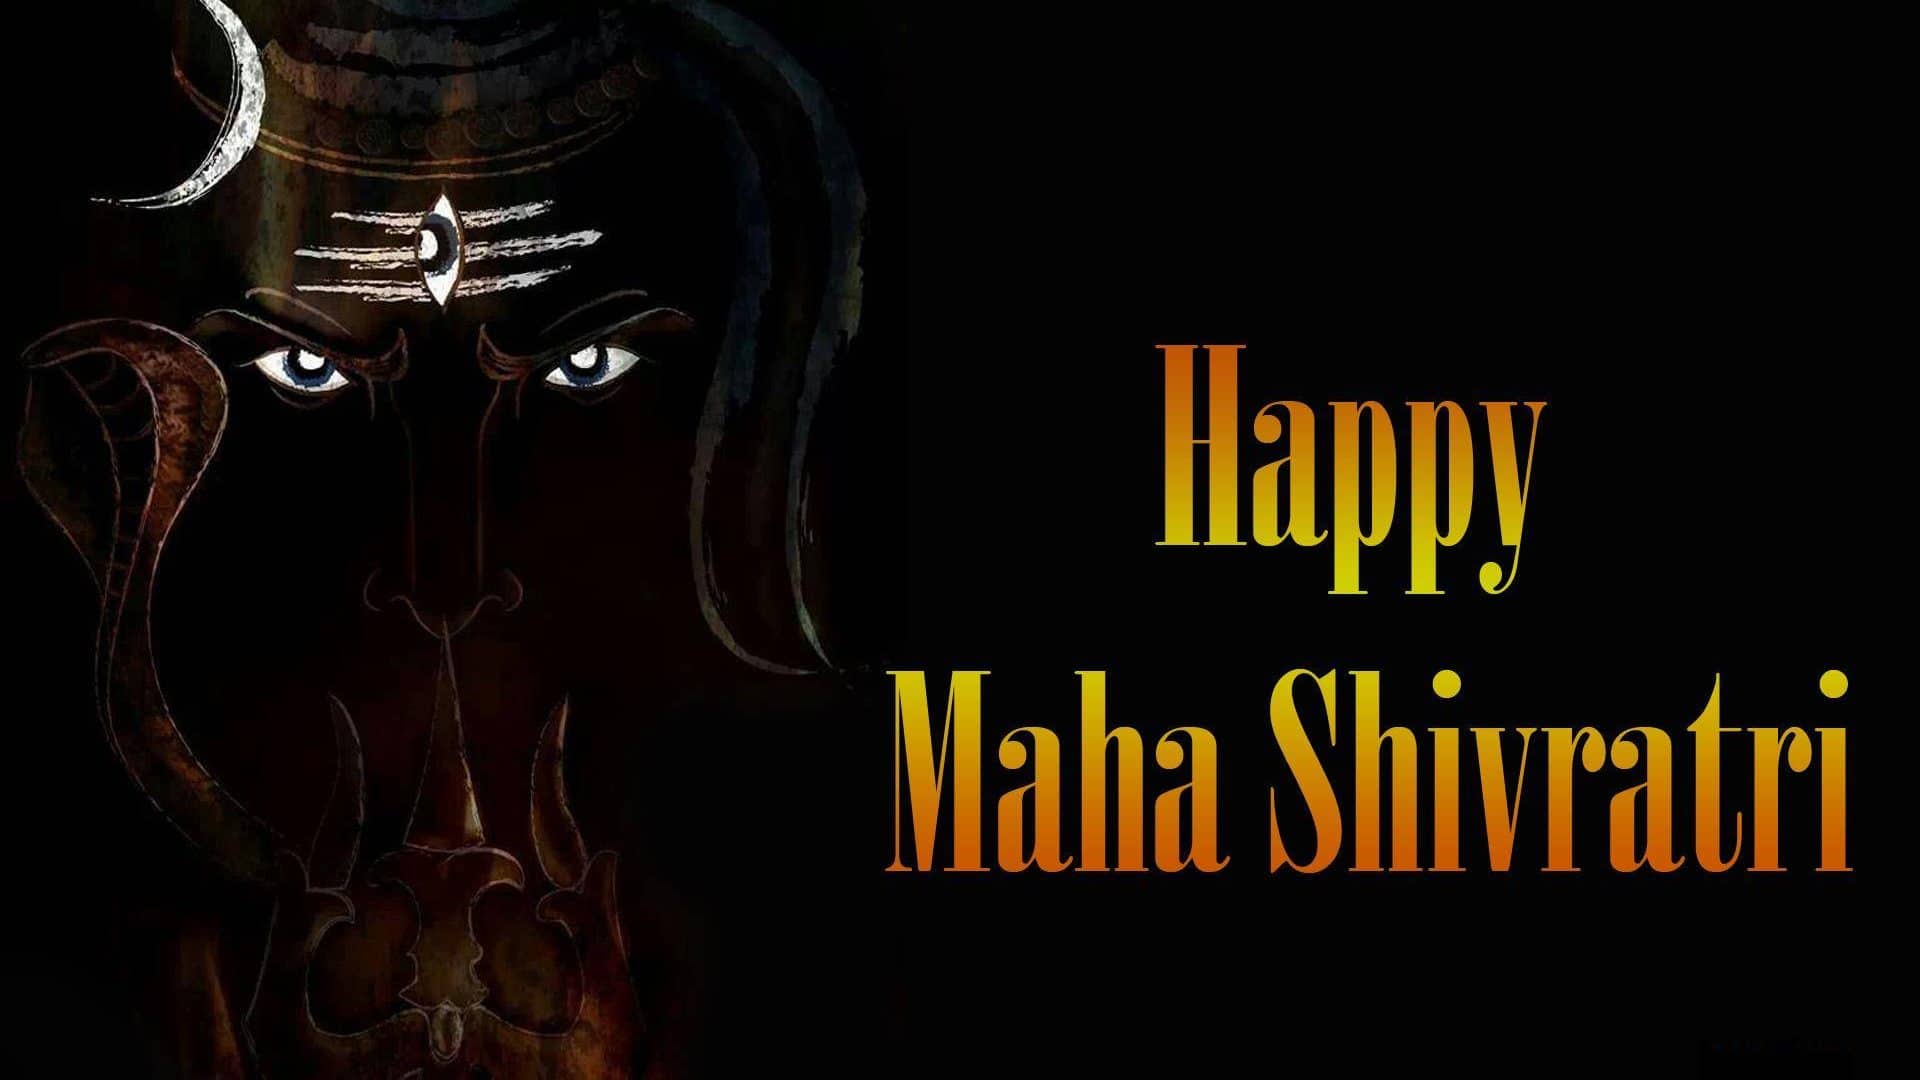 80+] Happy Maha Shivratri Images, Photo, Pic & Wallpaper (HD)